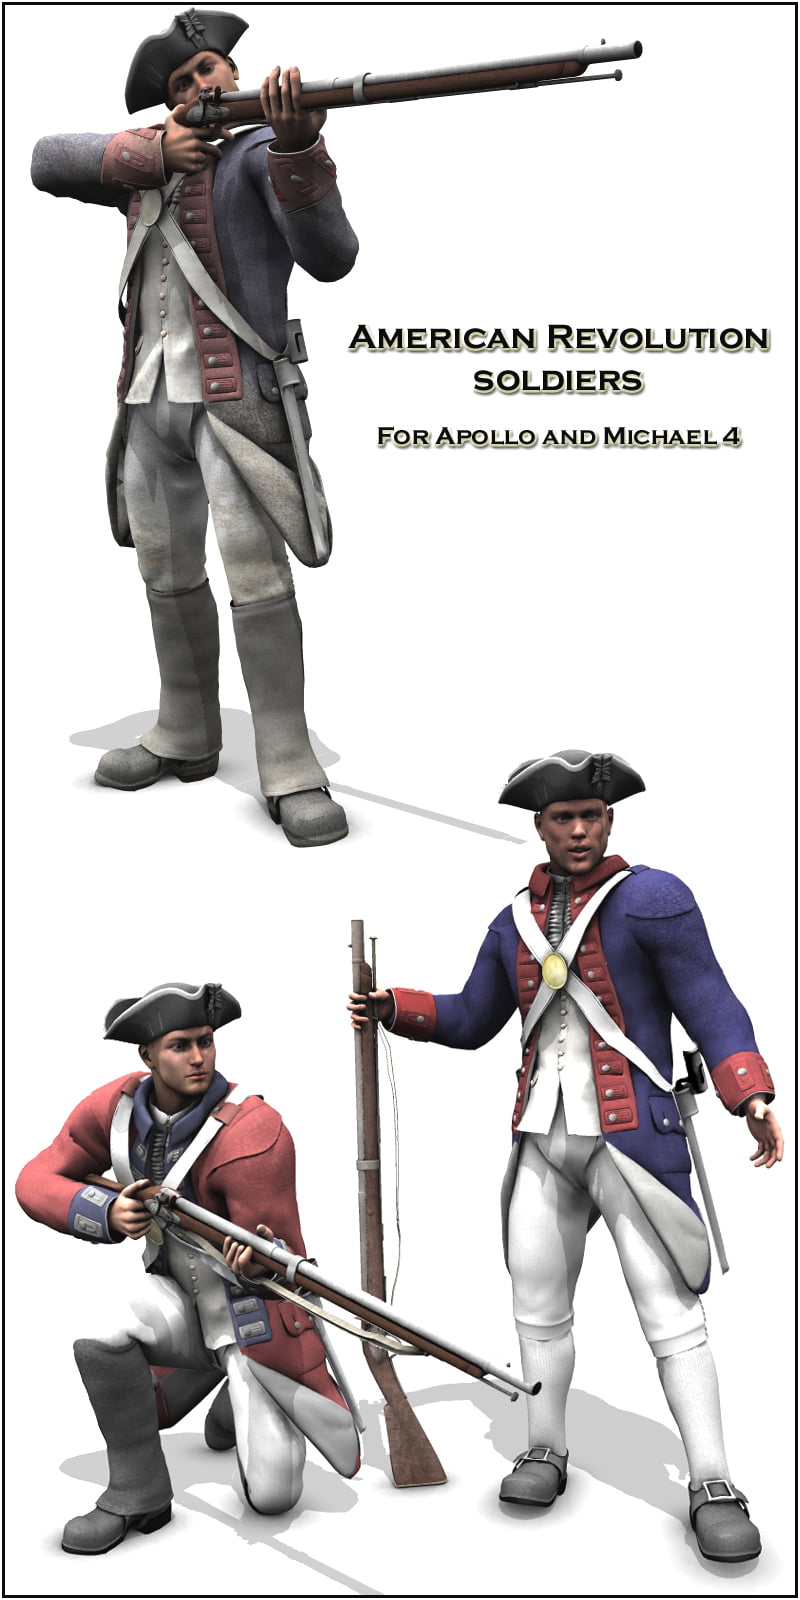 American Revolution soldiers